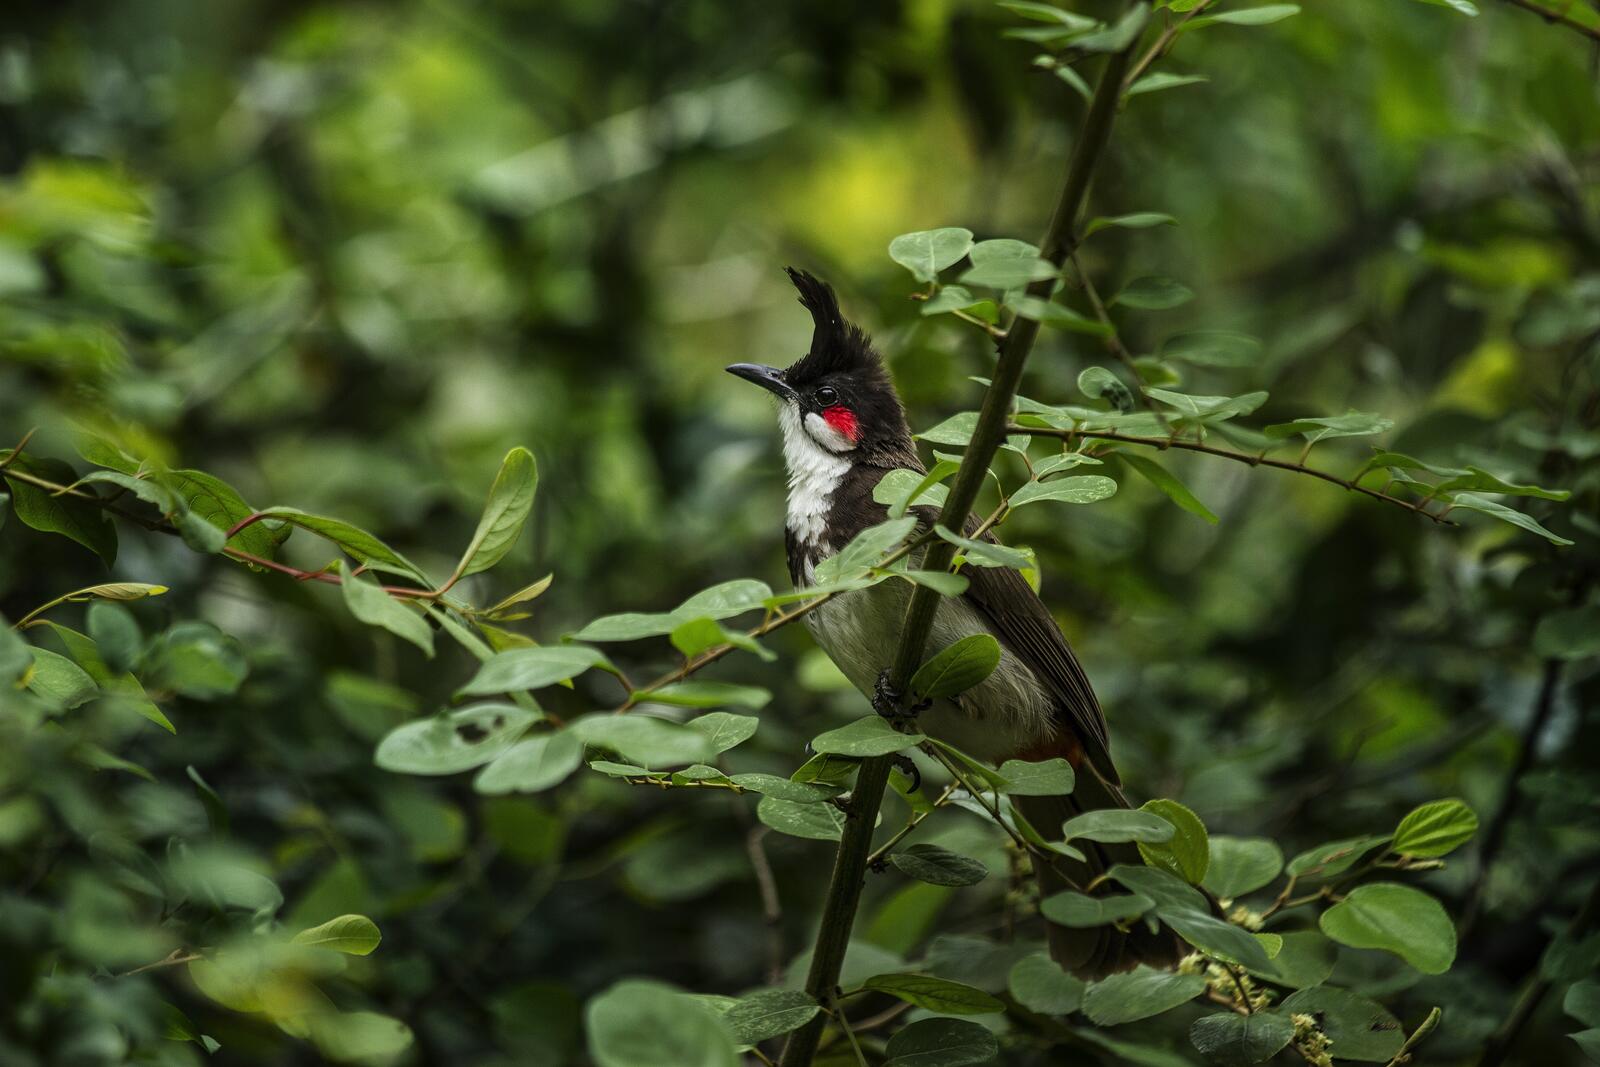 Free photo A bird sits on a branch amidst dense vegetation